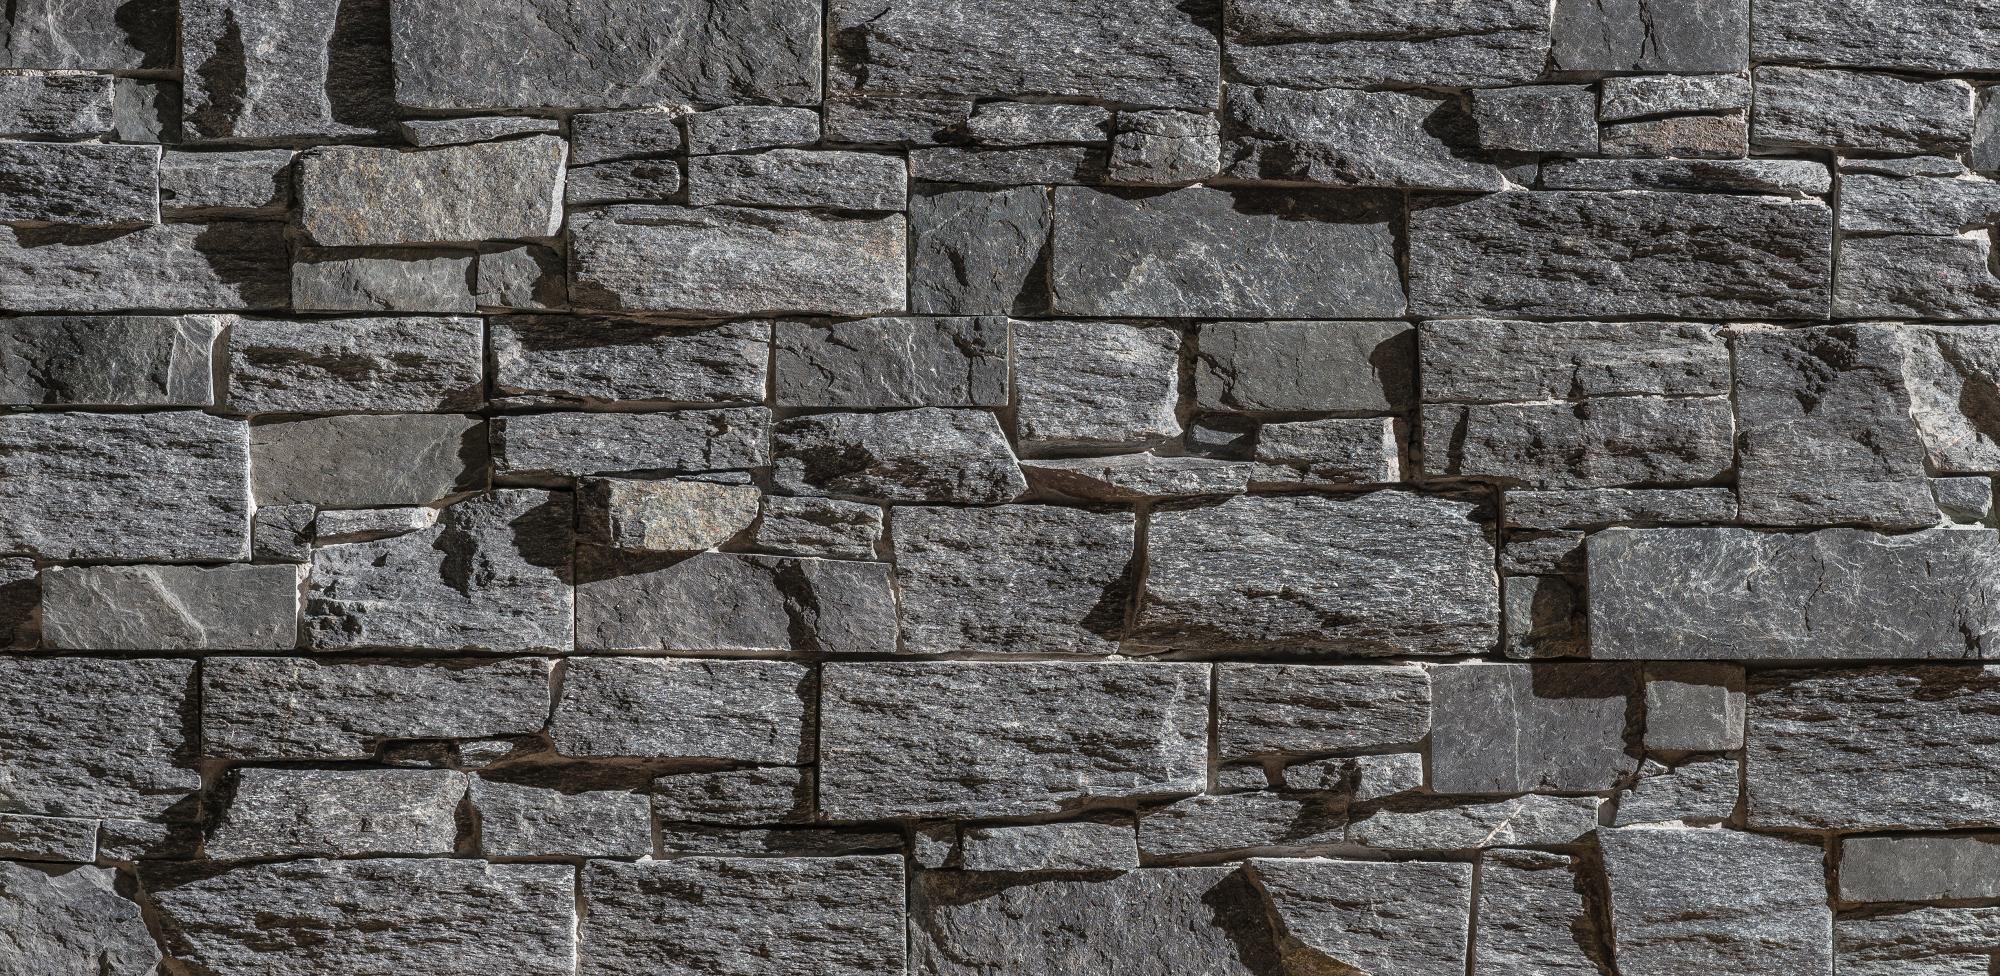 Rocky Decorative Panels-megalithic Wild Stone For Premium Interior Design.  Color Classic Gray. Artificial Wall Stone